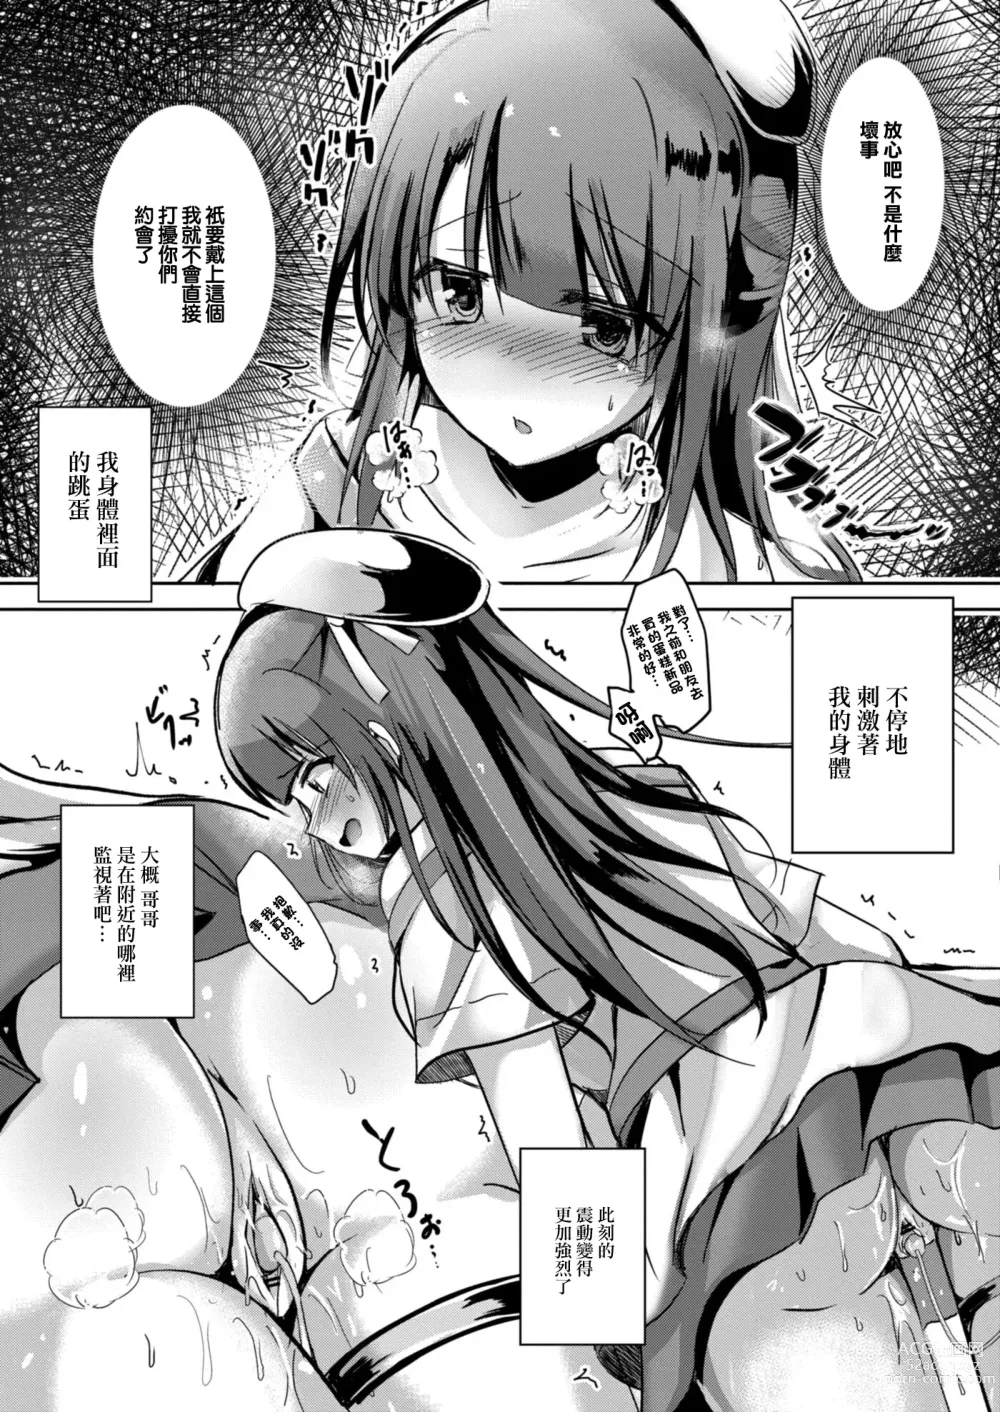 Page 3 of manga Netoraretatte Kimi ga Suki Ch. 3